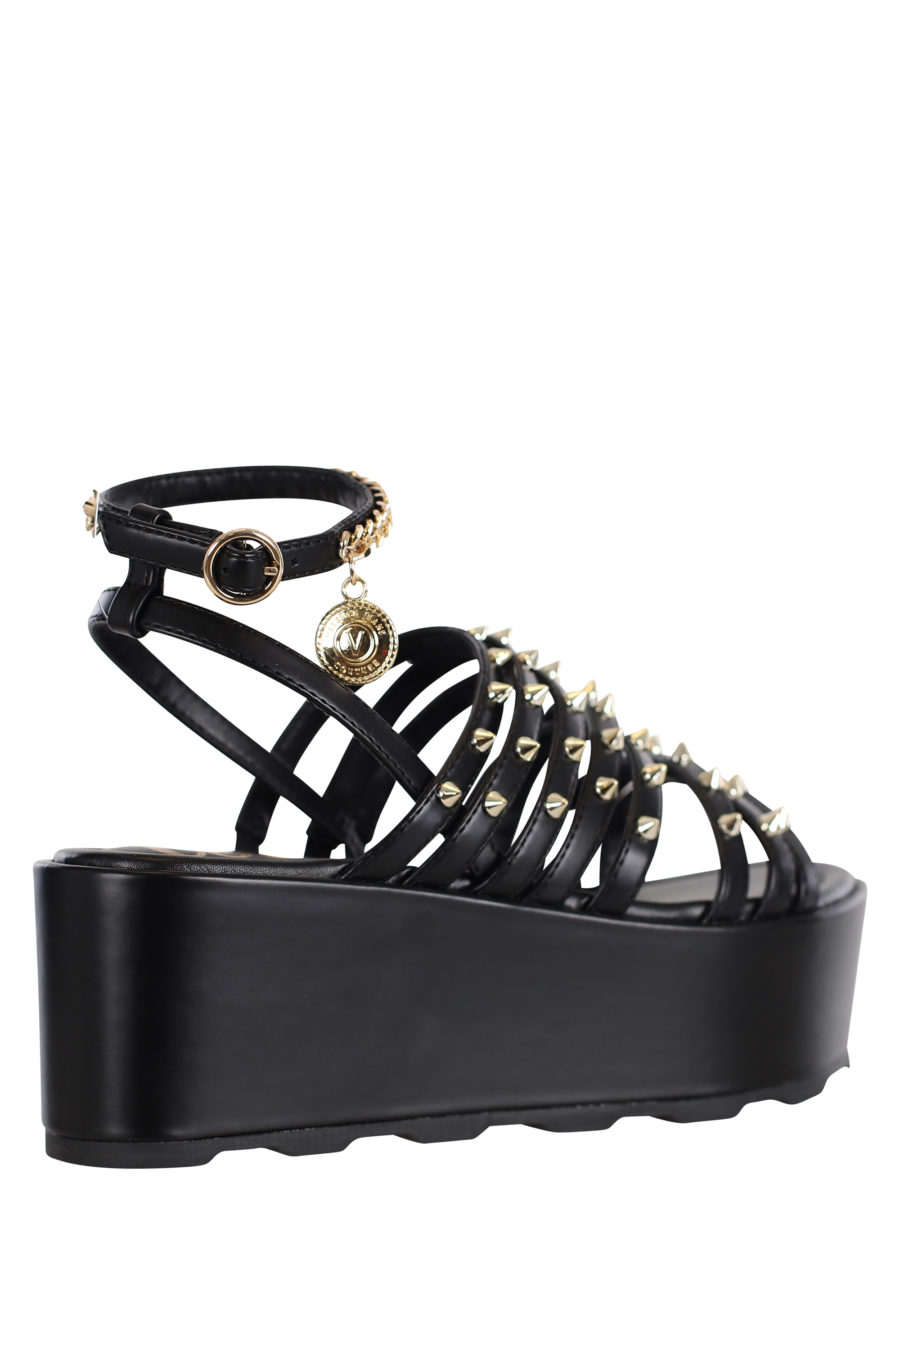 Sandalias negras con plataforma y detalles dorados - IMG 0185